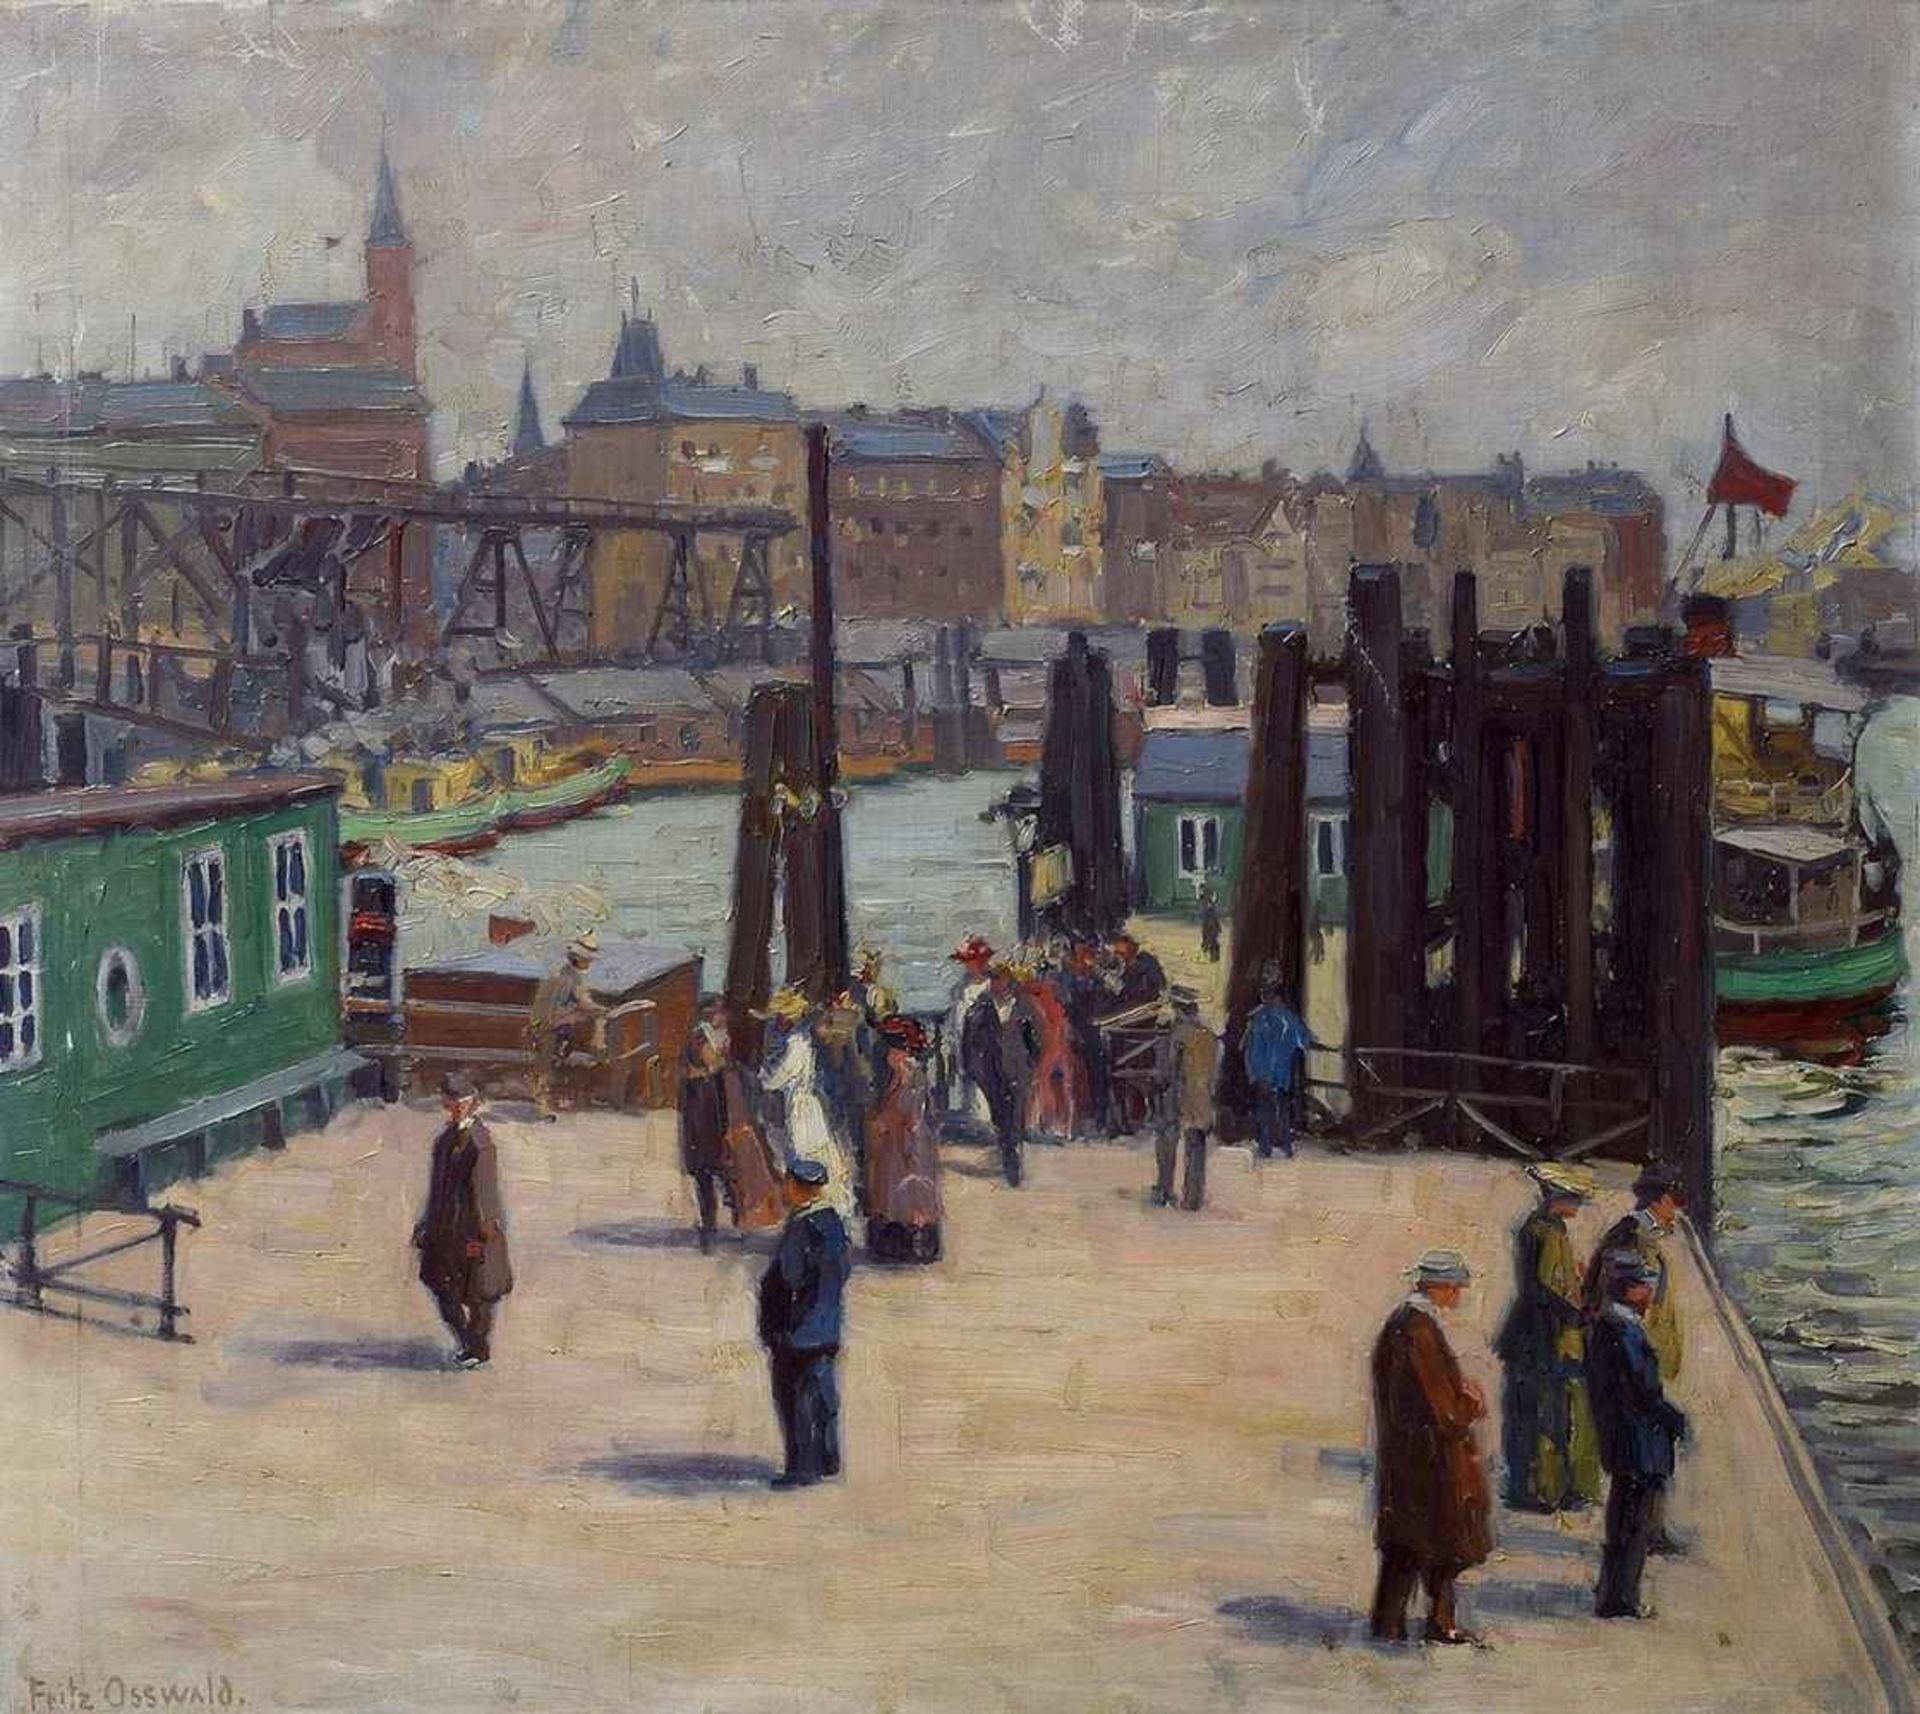 Osswald, Fritz (1887-1966) "Angler in the port of Hamburg", oil/canvas, signed lower left,